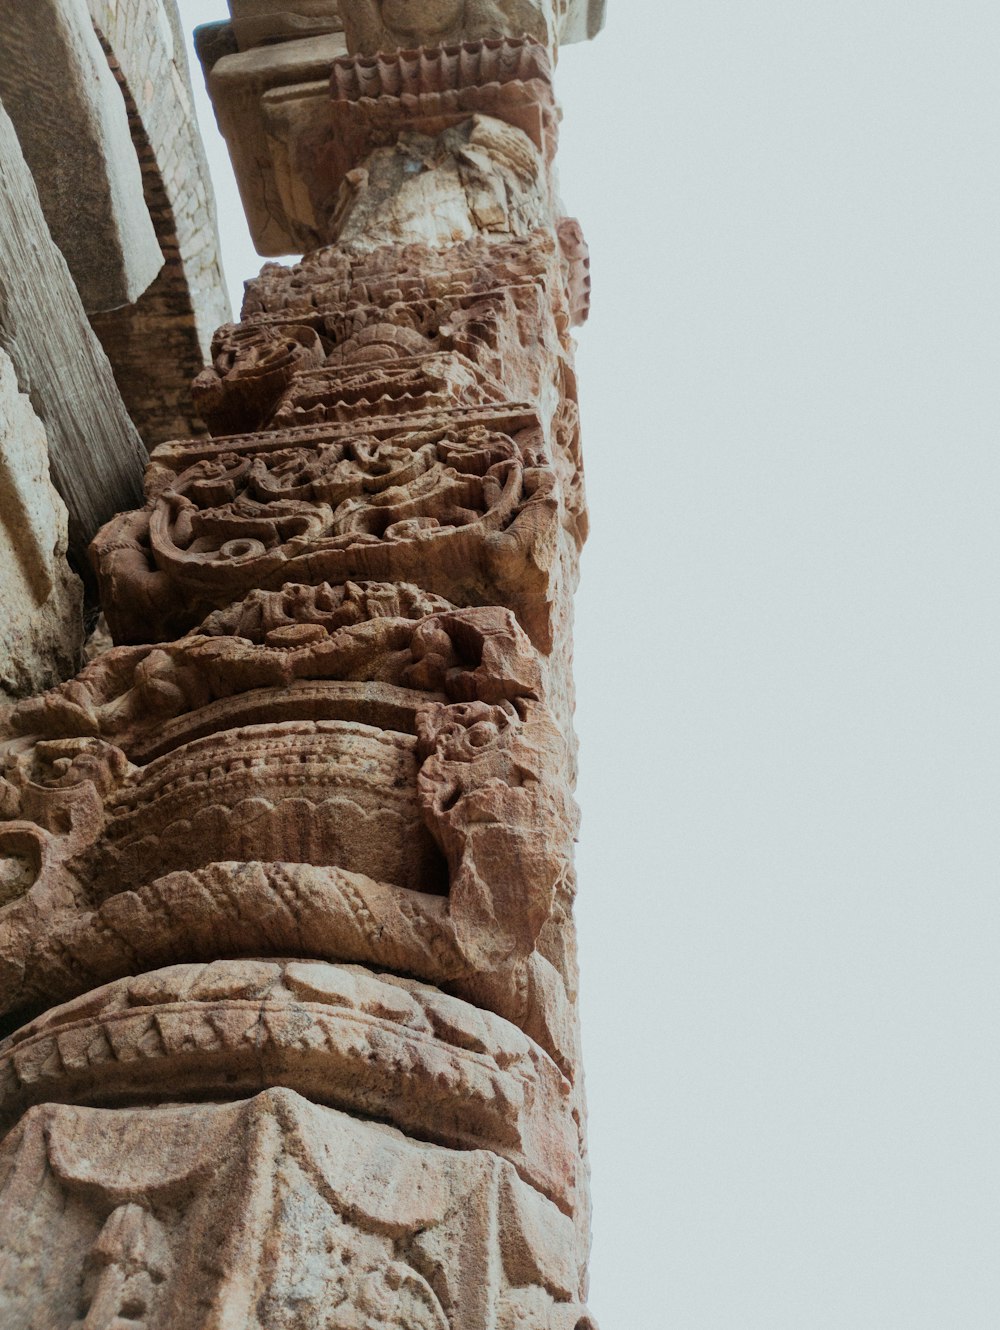 a close-up of a stone sculpture